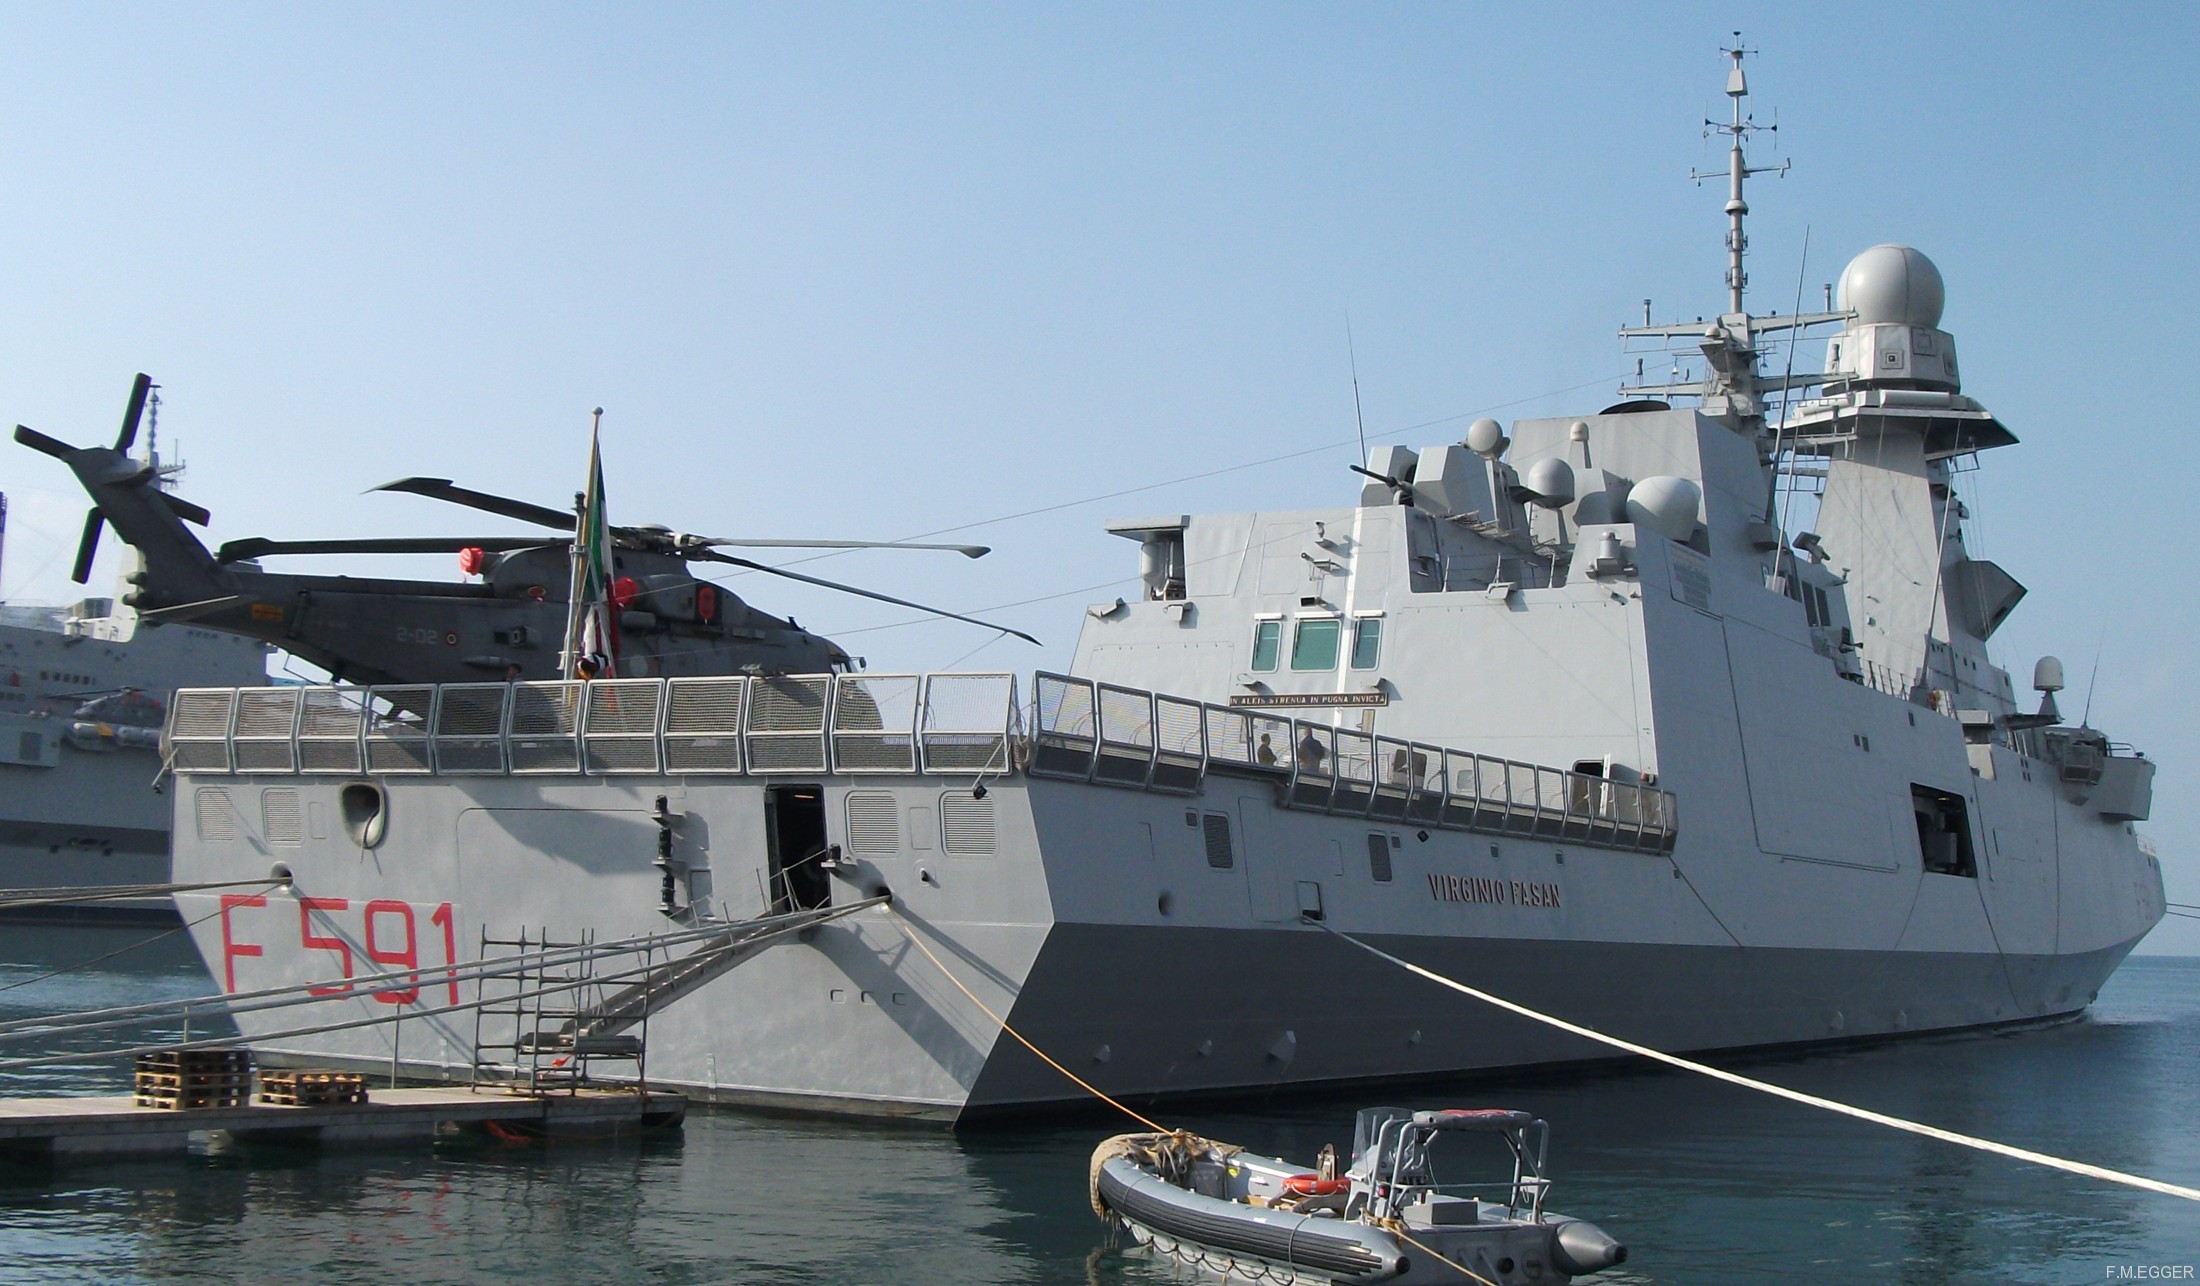 f-591 virginio fasan its nave bergamini fremm class guided missile frigate italian navy marina militare x29 trieste port